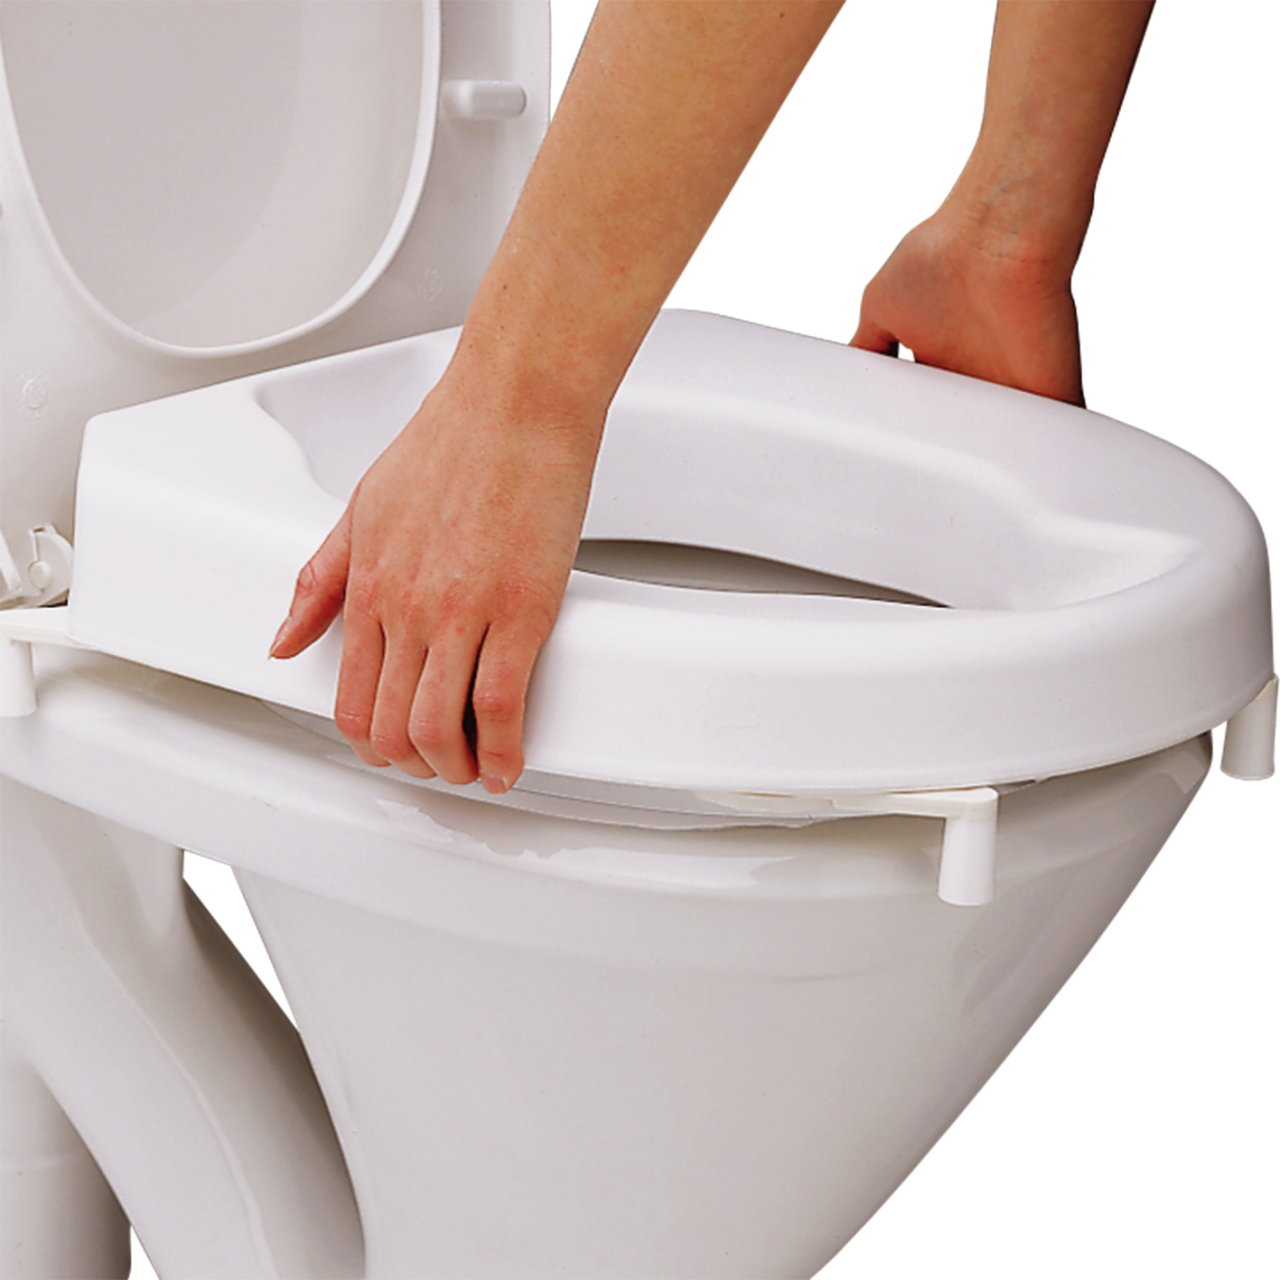 Etac Hi-Loo Toilet Seat with Brackets - 10 cm